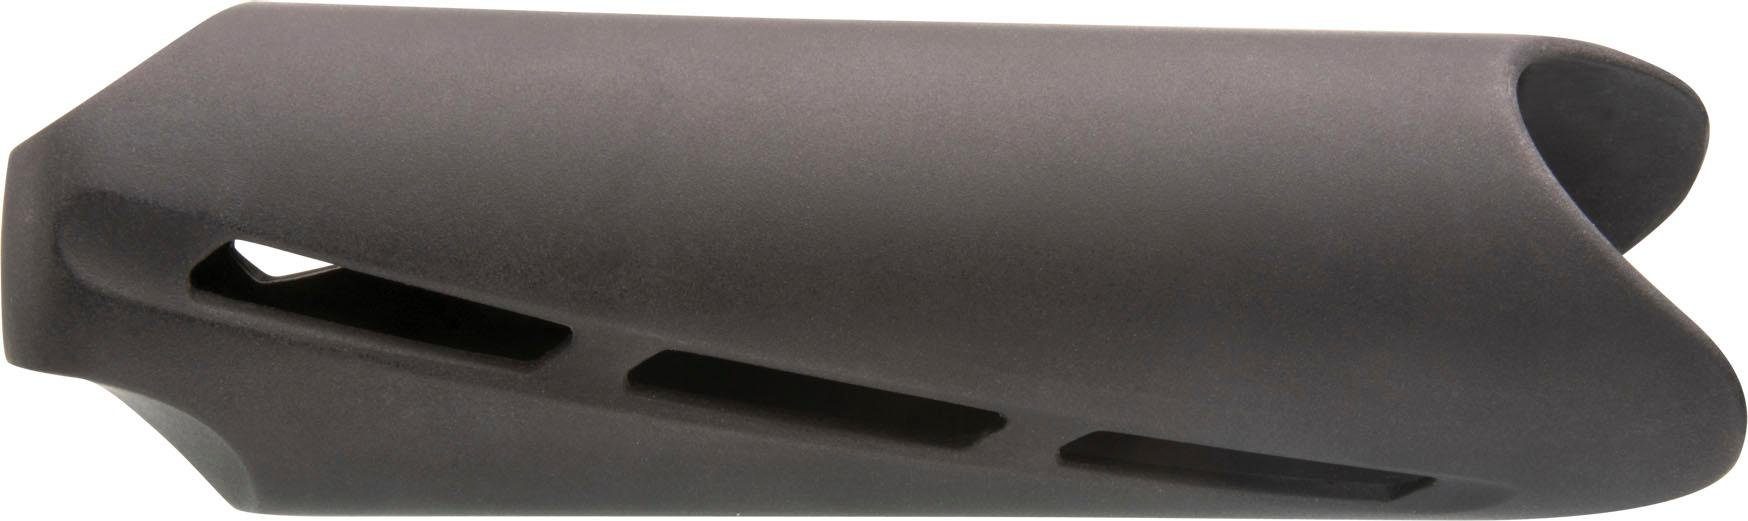 Remington Glätteisen Curl Straight Keramik-Turmalin-Beschichtung Haarglätter & S6606 Confidence